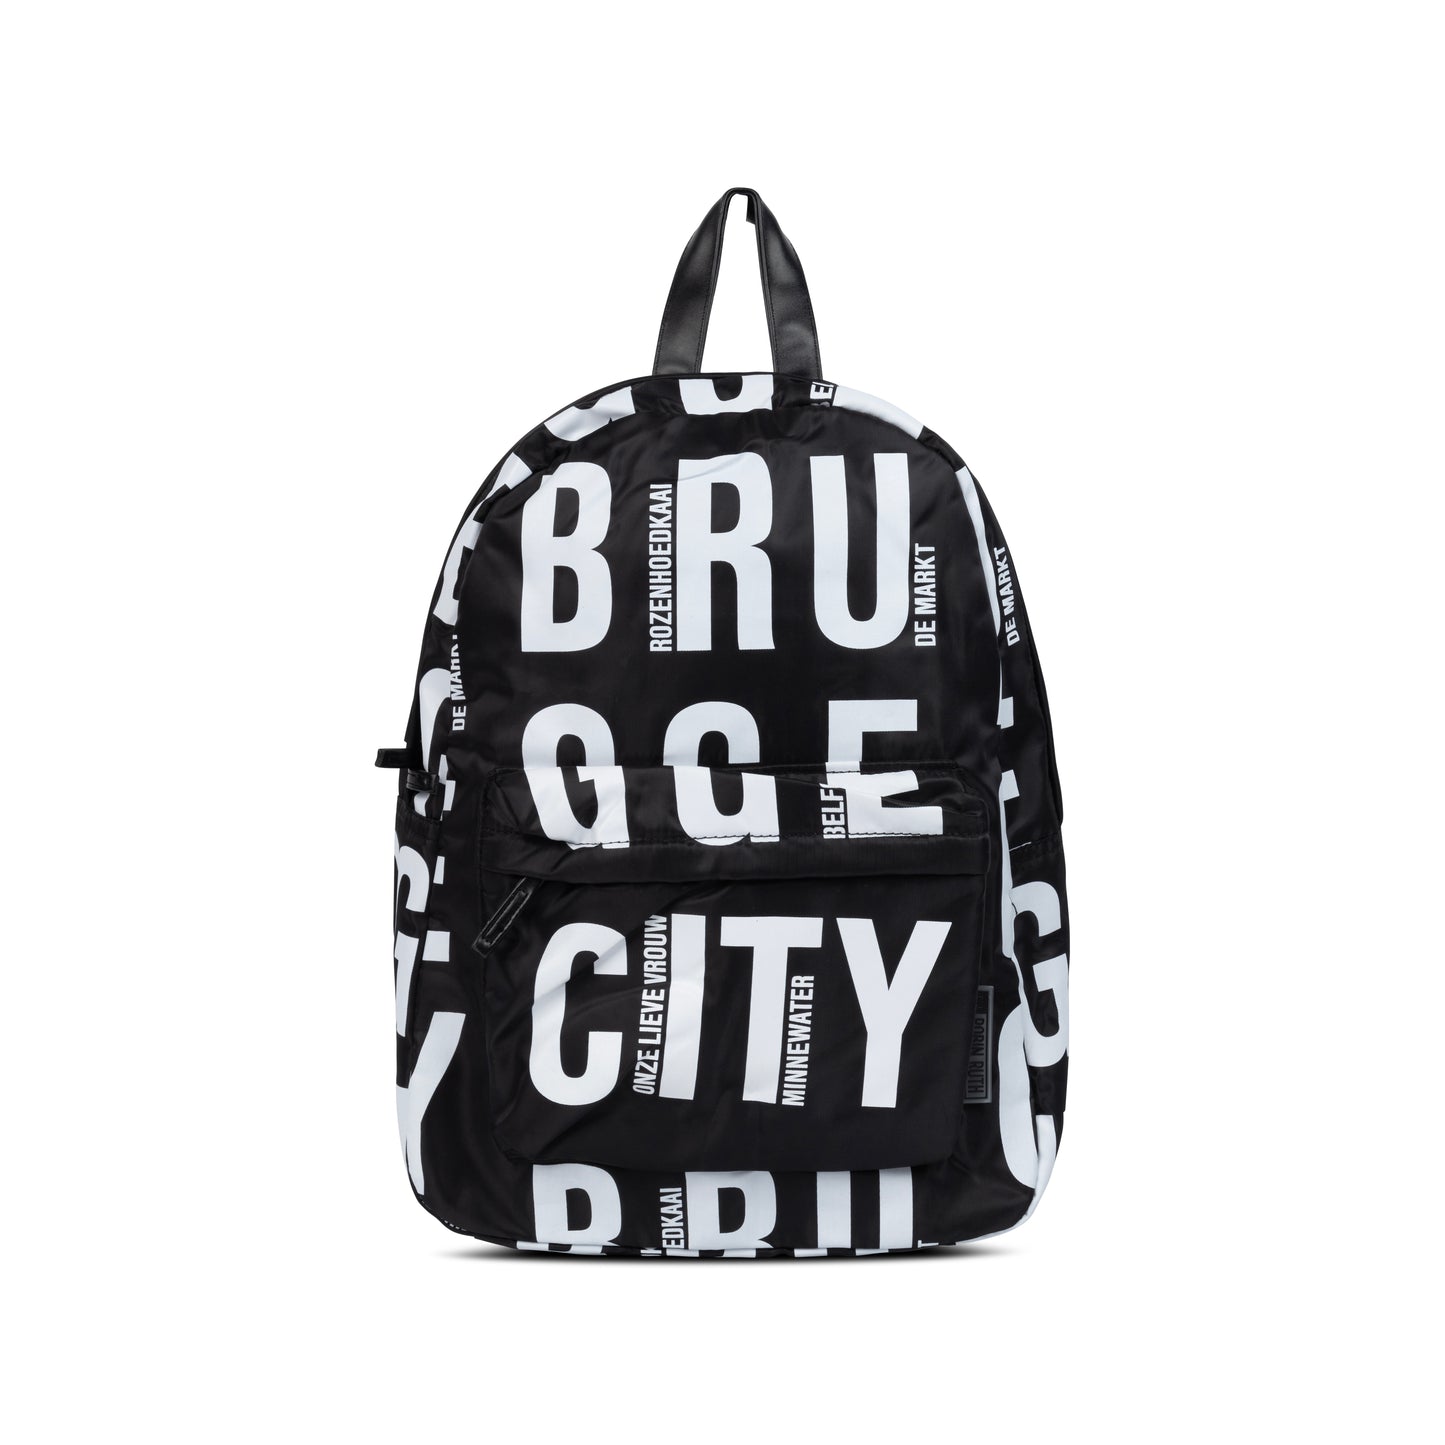 Daniel - Backpack - Brugge